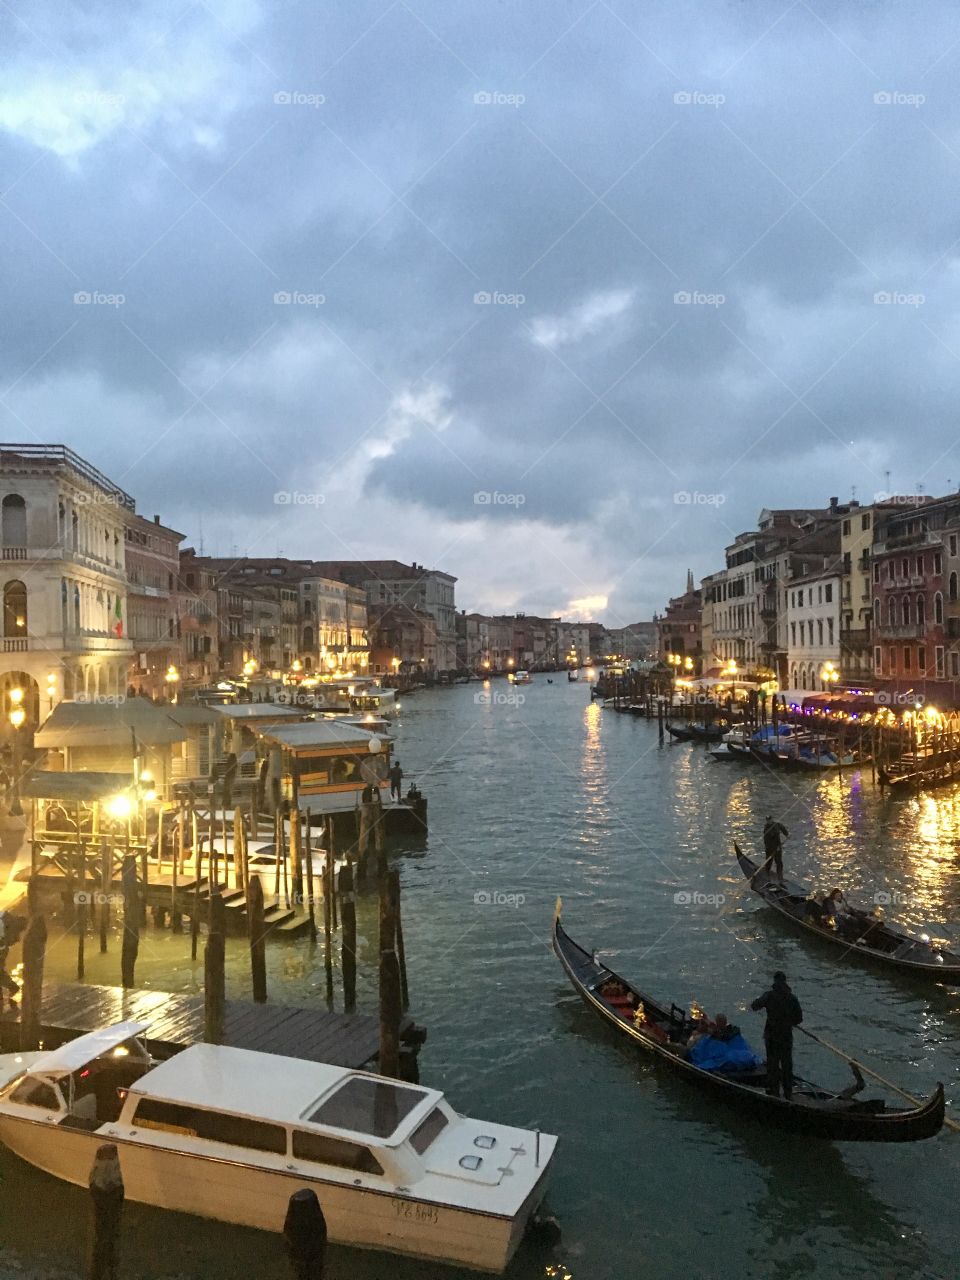 Picturesque Evening in Venice, Italy